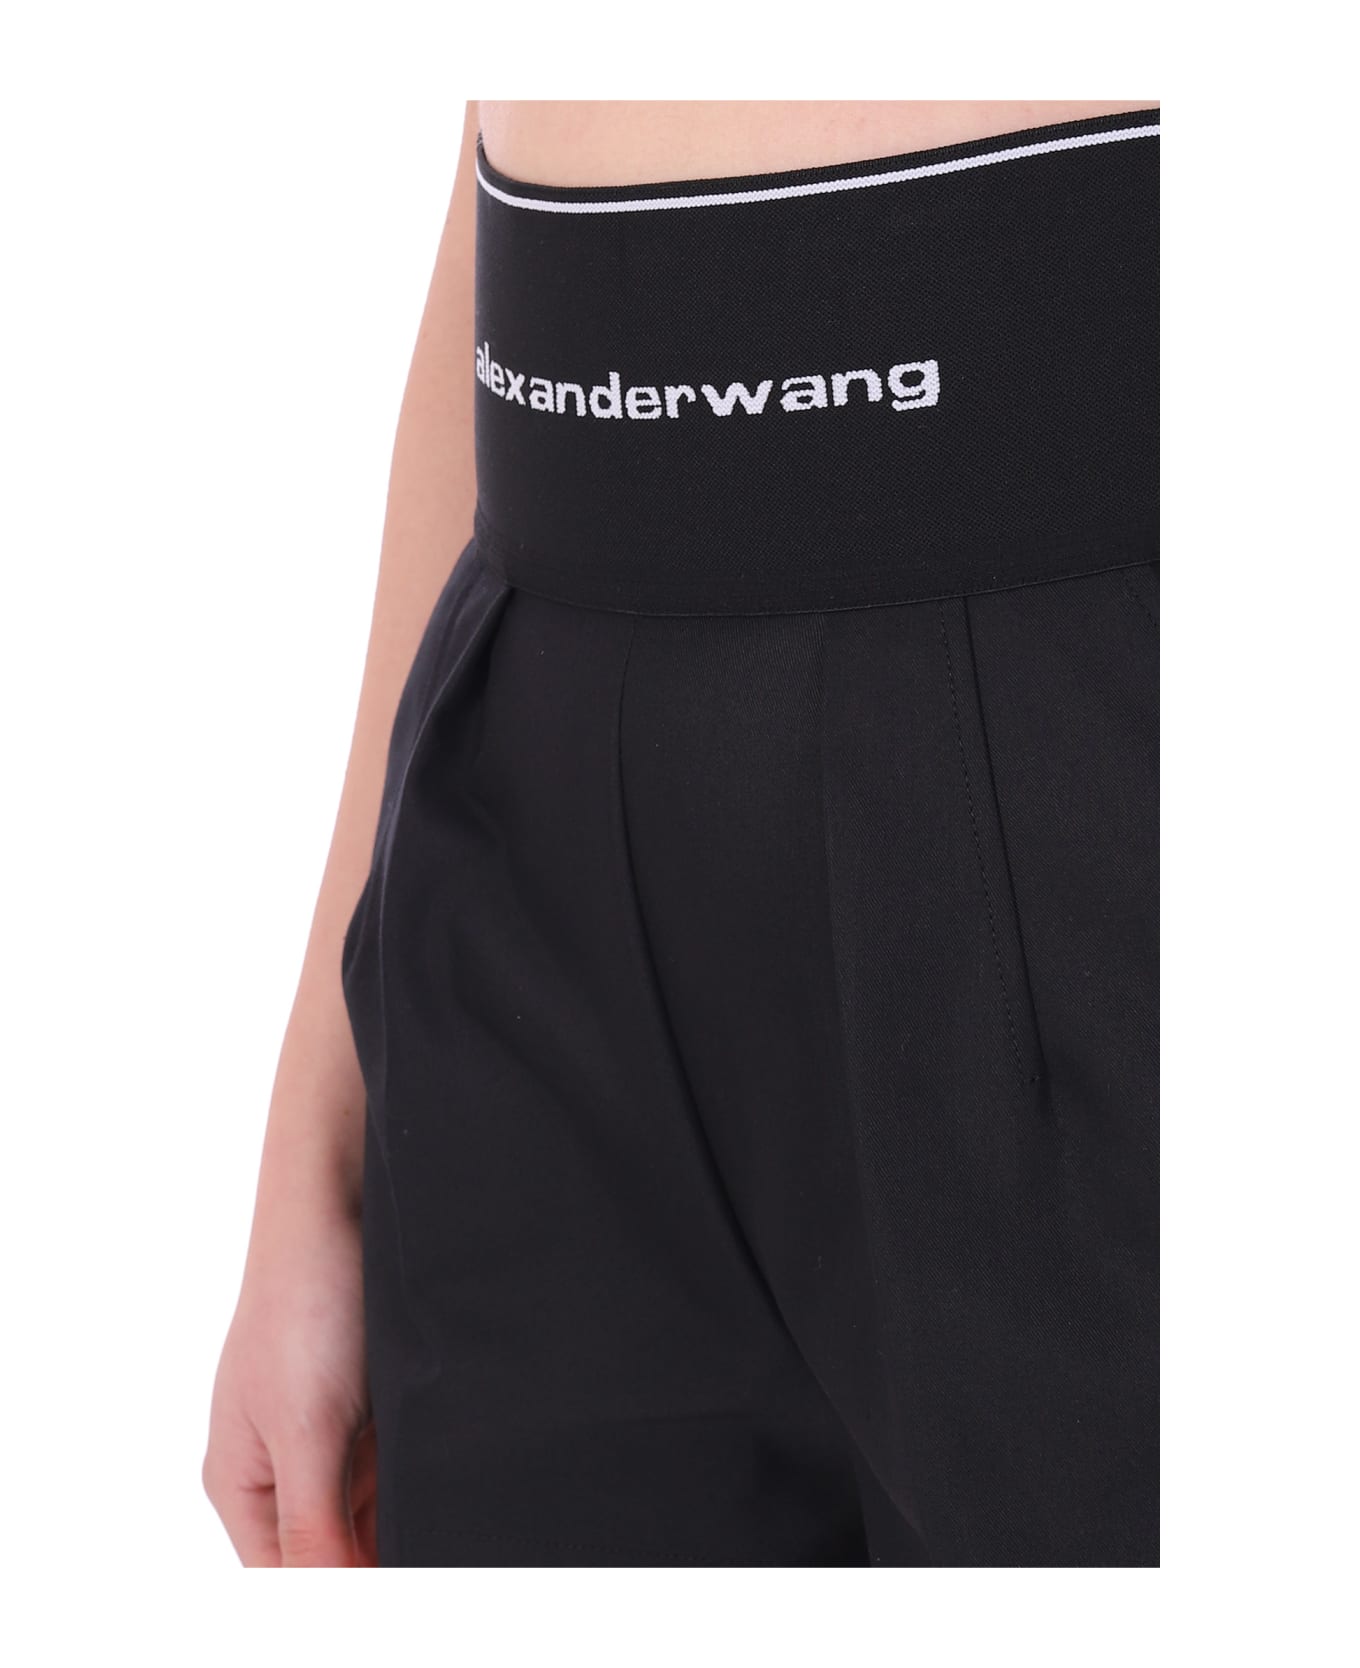 Alexander Wang Shorts In Black Synthetic Fibers - Black